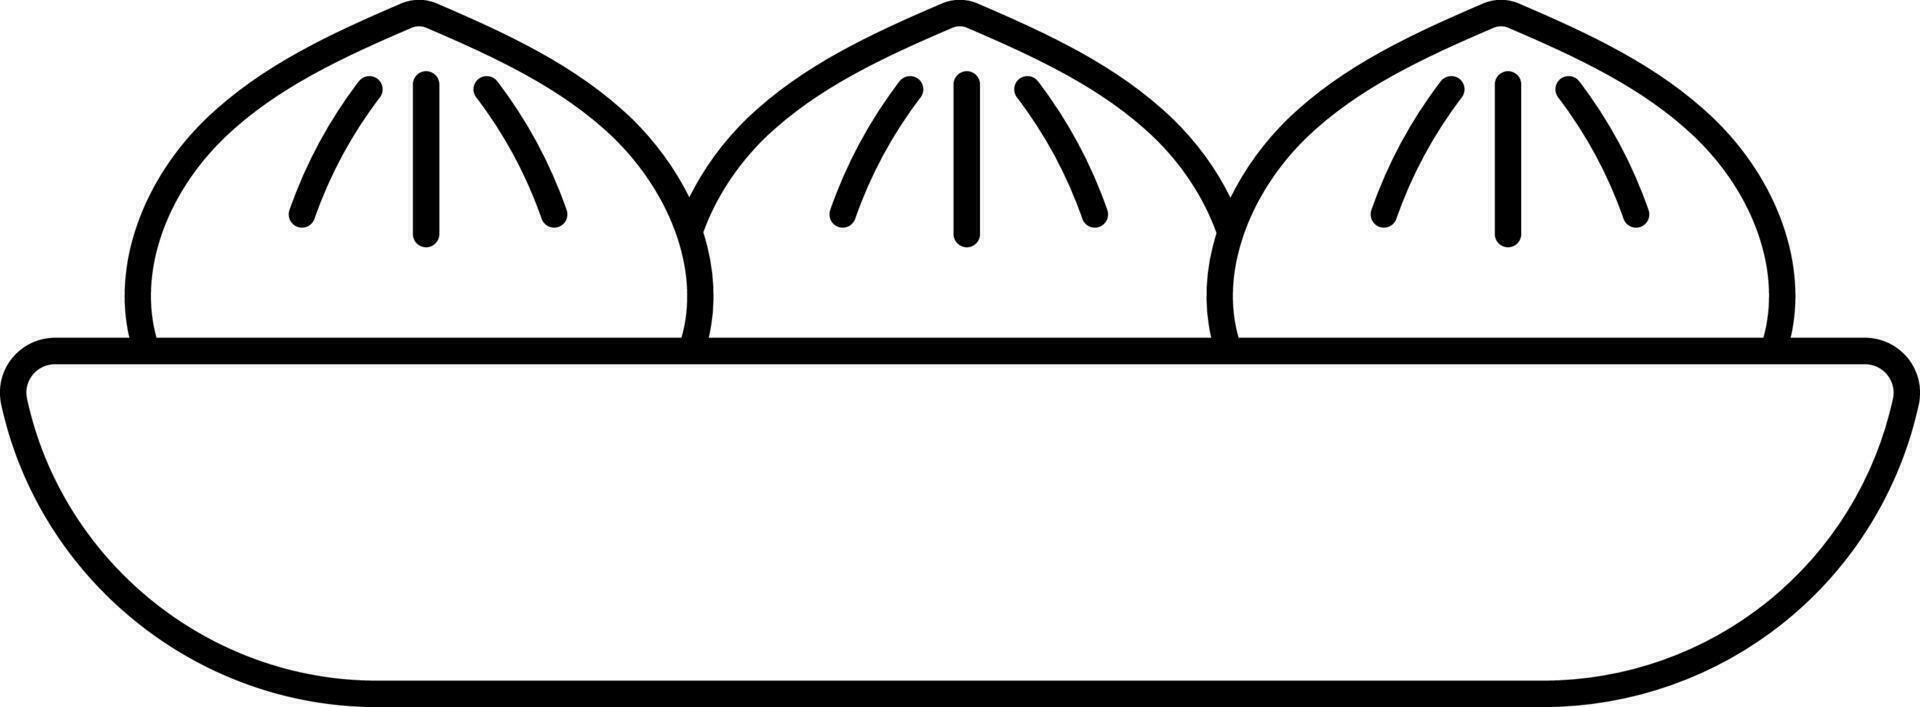 Momos Dish Bowl Icon In Thin Line Art. vector